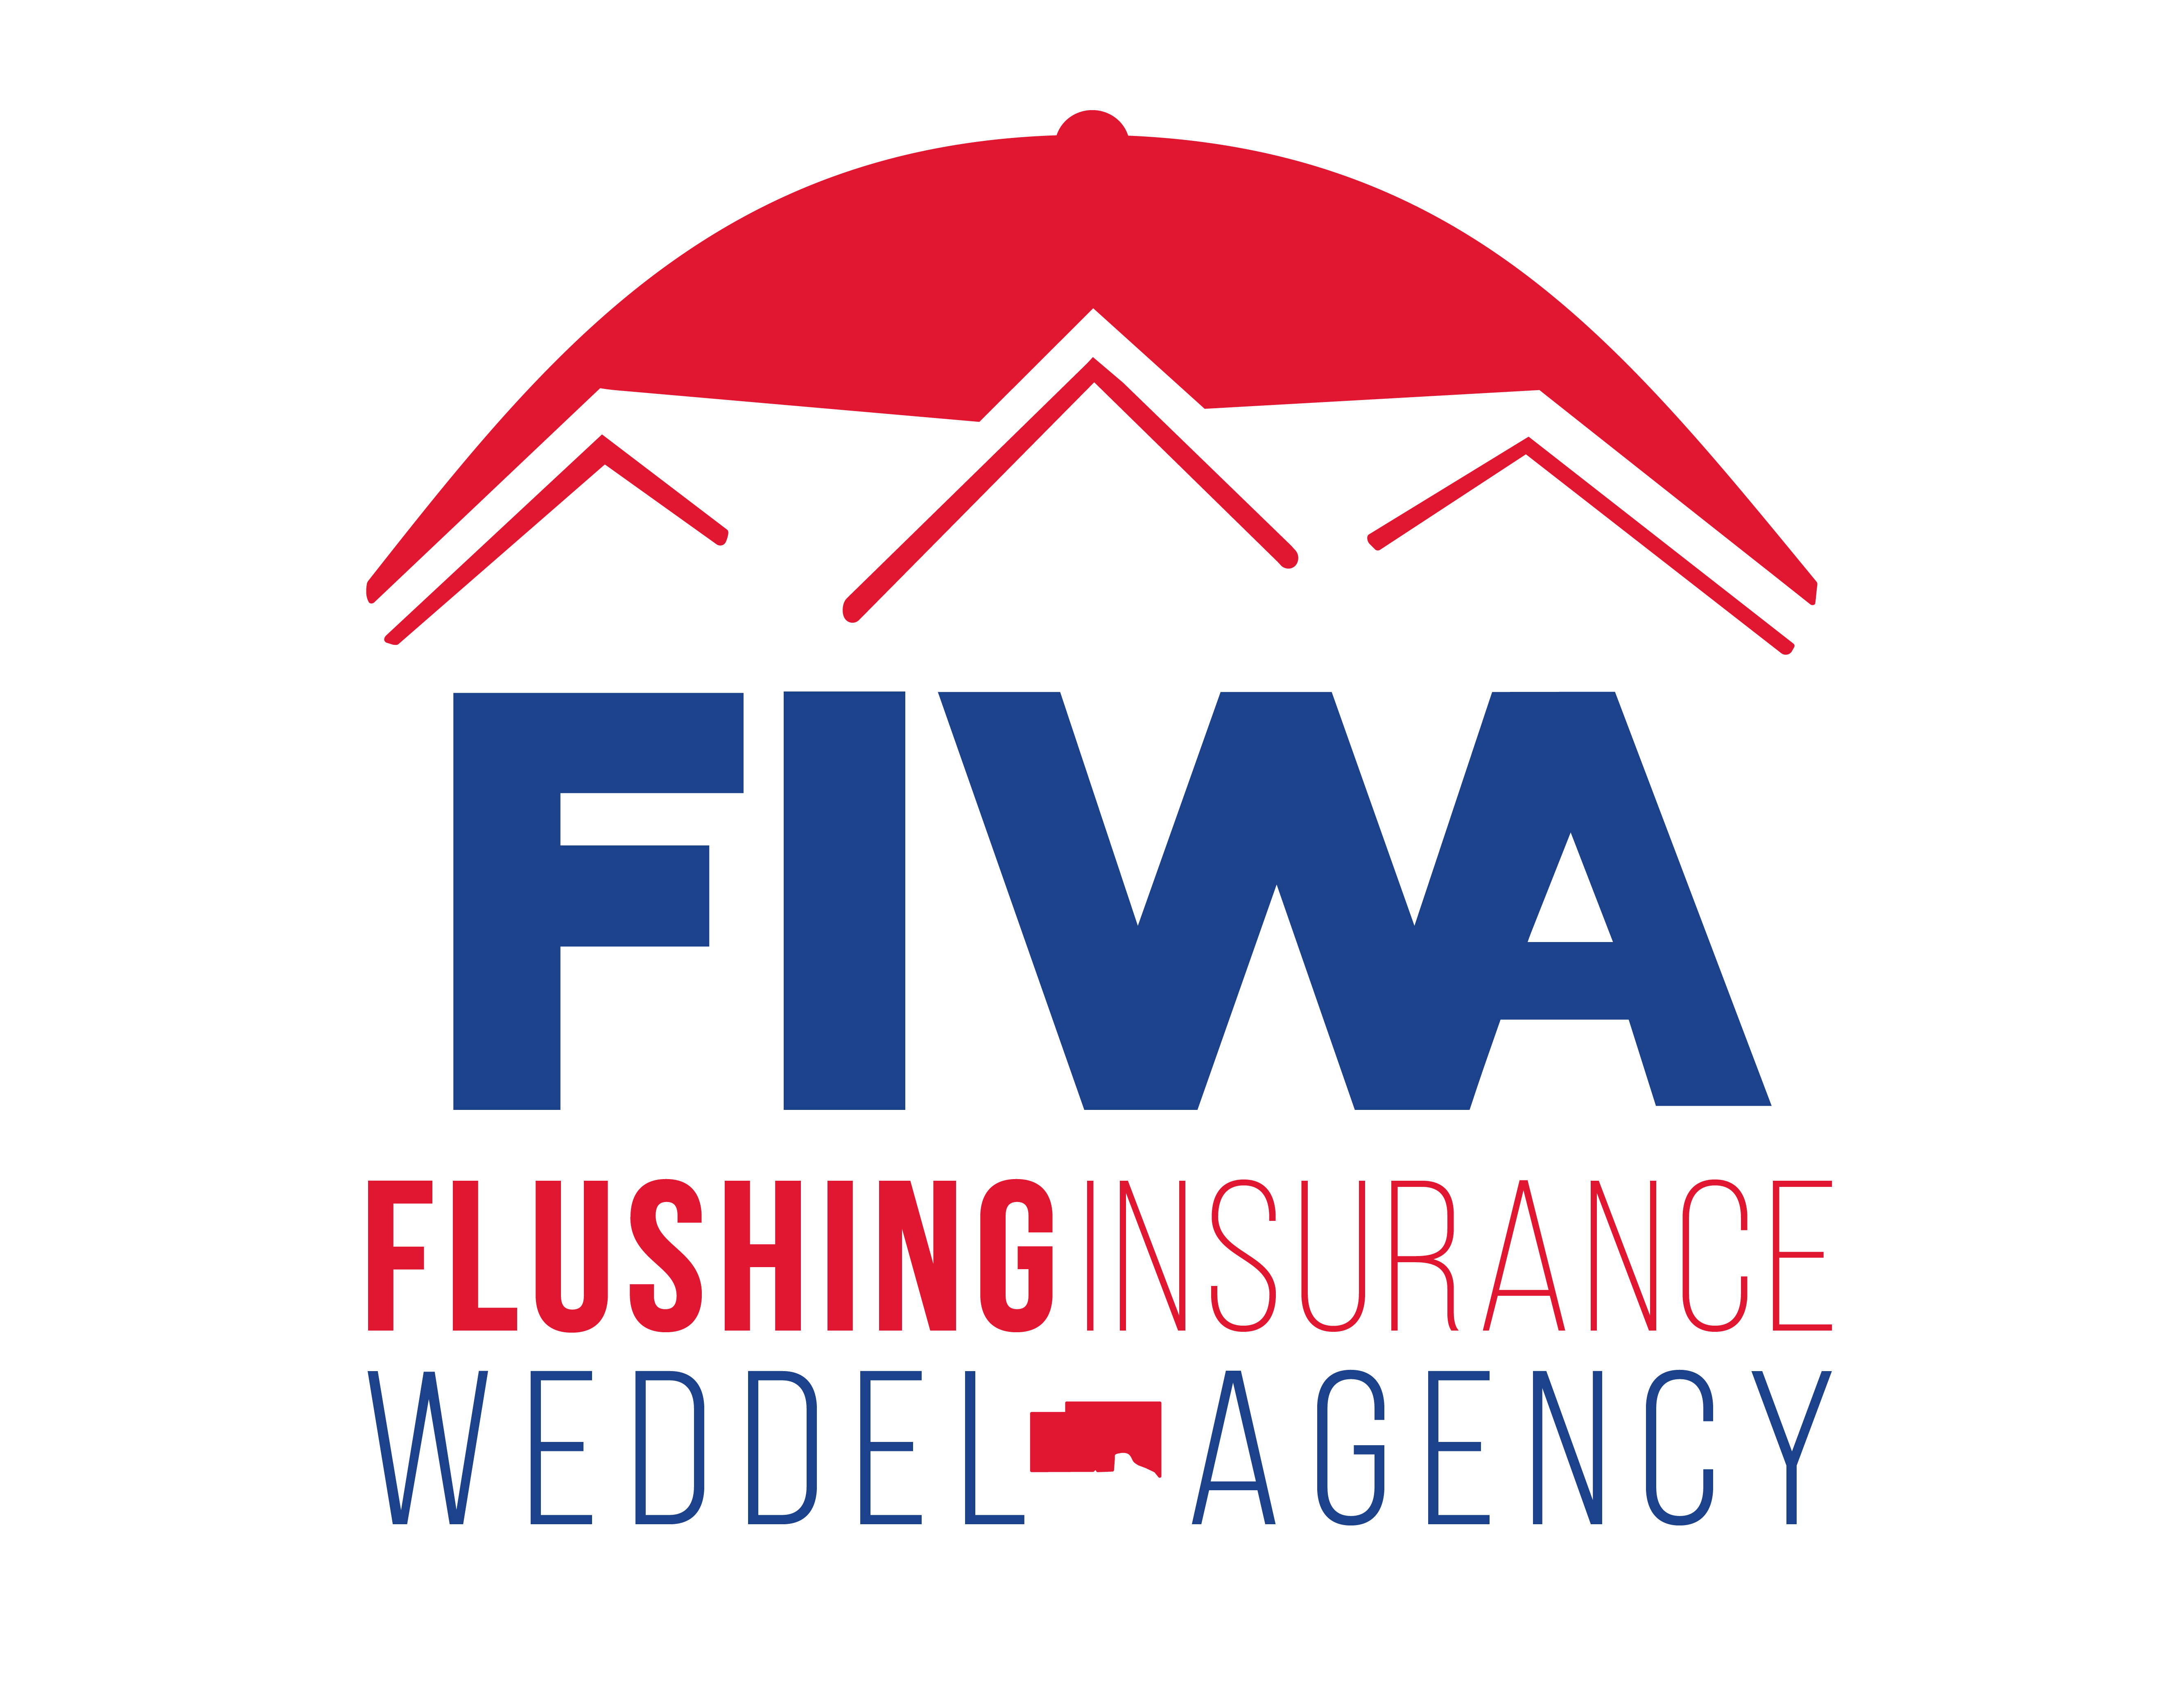 Flushing Insurance Weddel Agency Logo